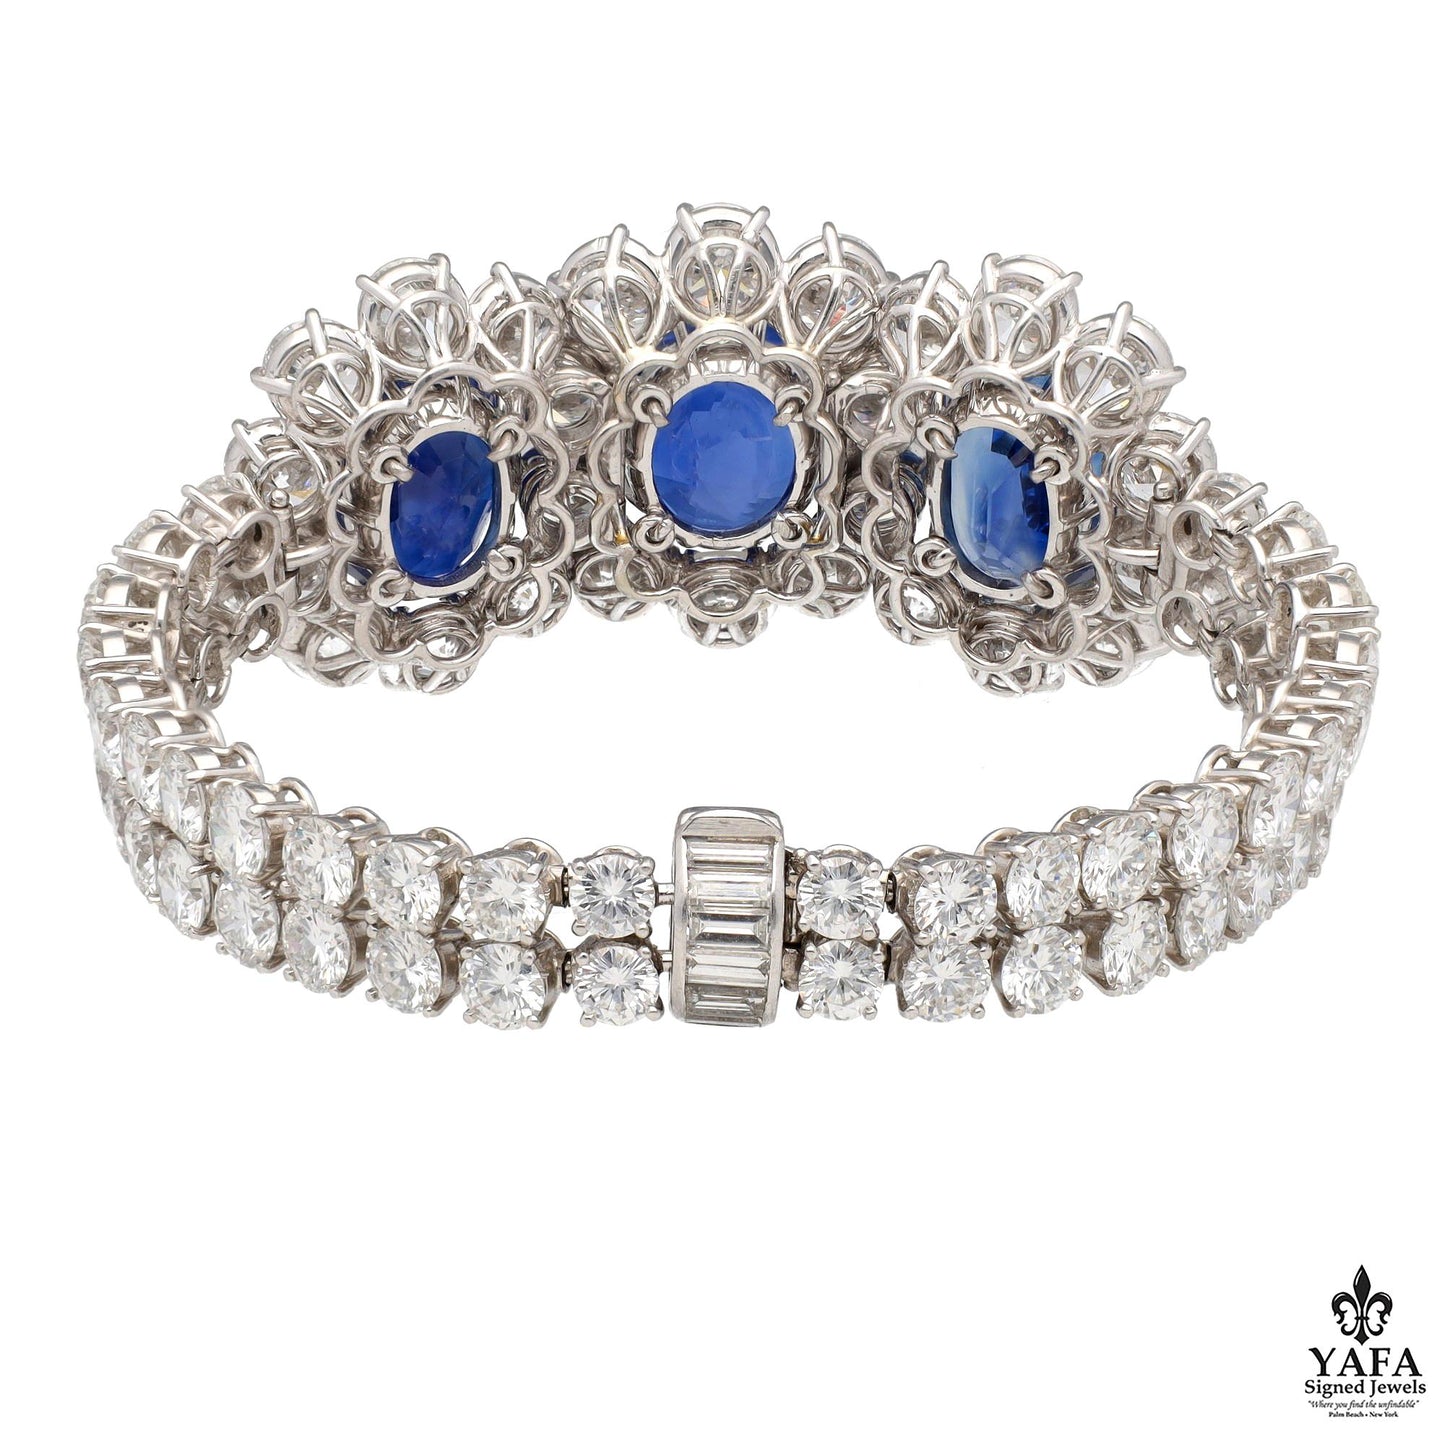 Van Cleef & Arpels 3-Oval Shaped Sapphires and Diamond Bracelet